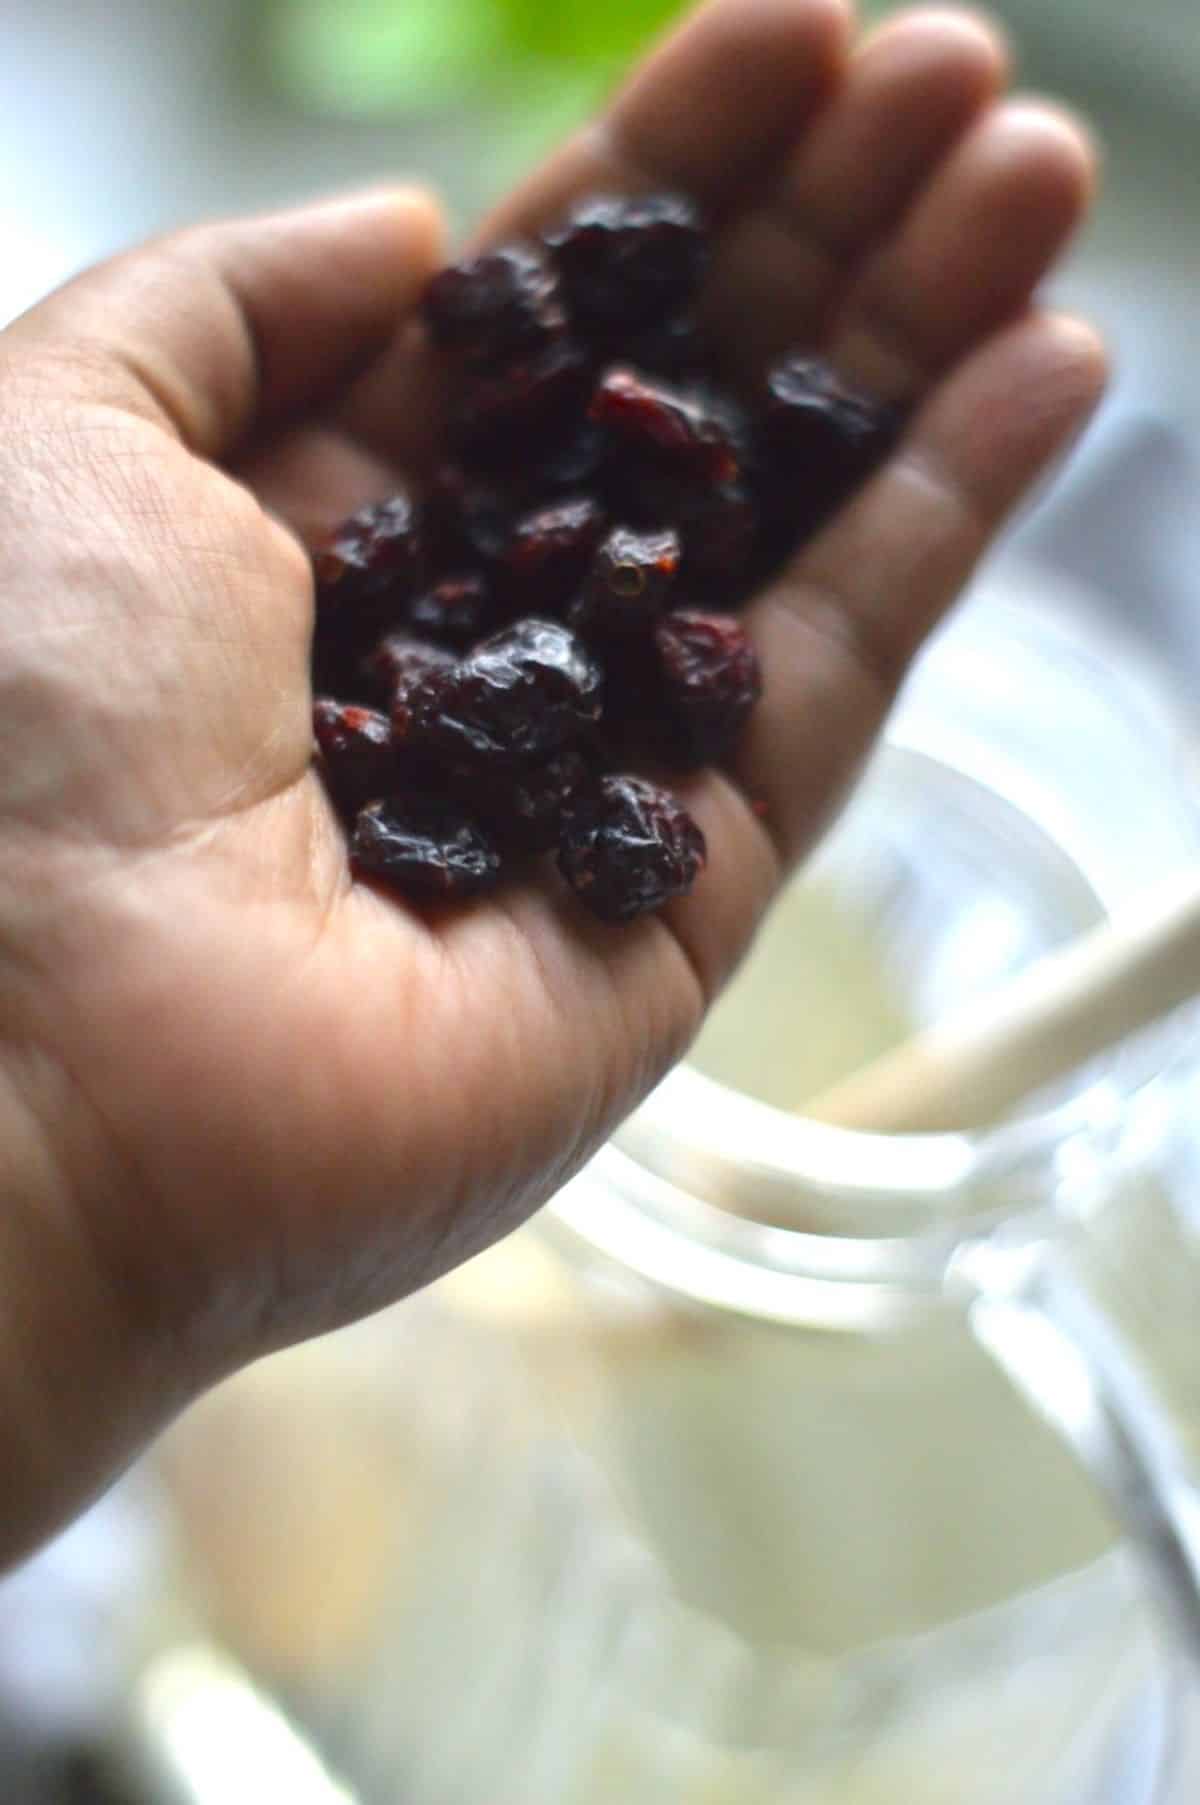 Dried fruits on a palm of a hand.